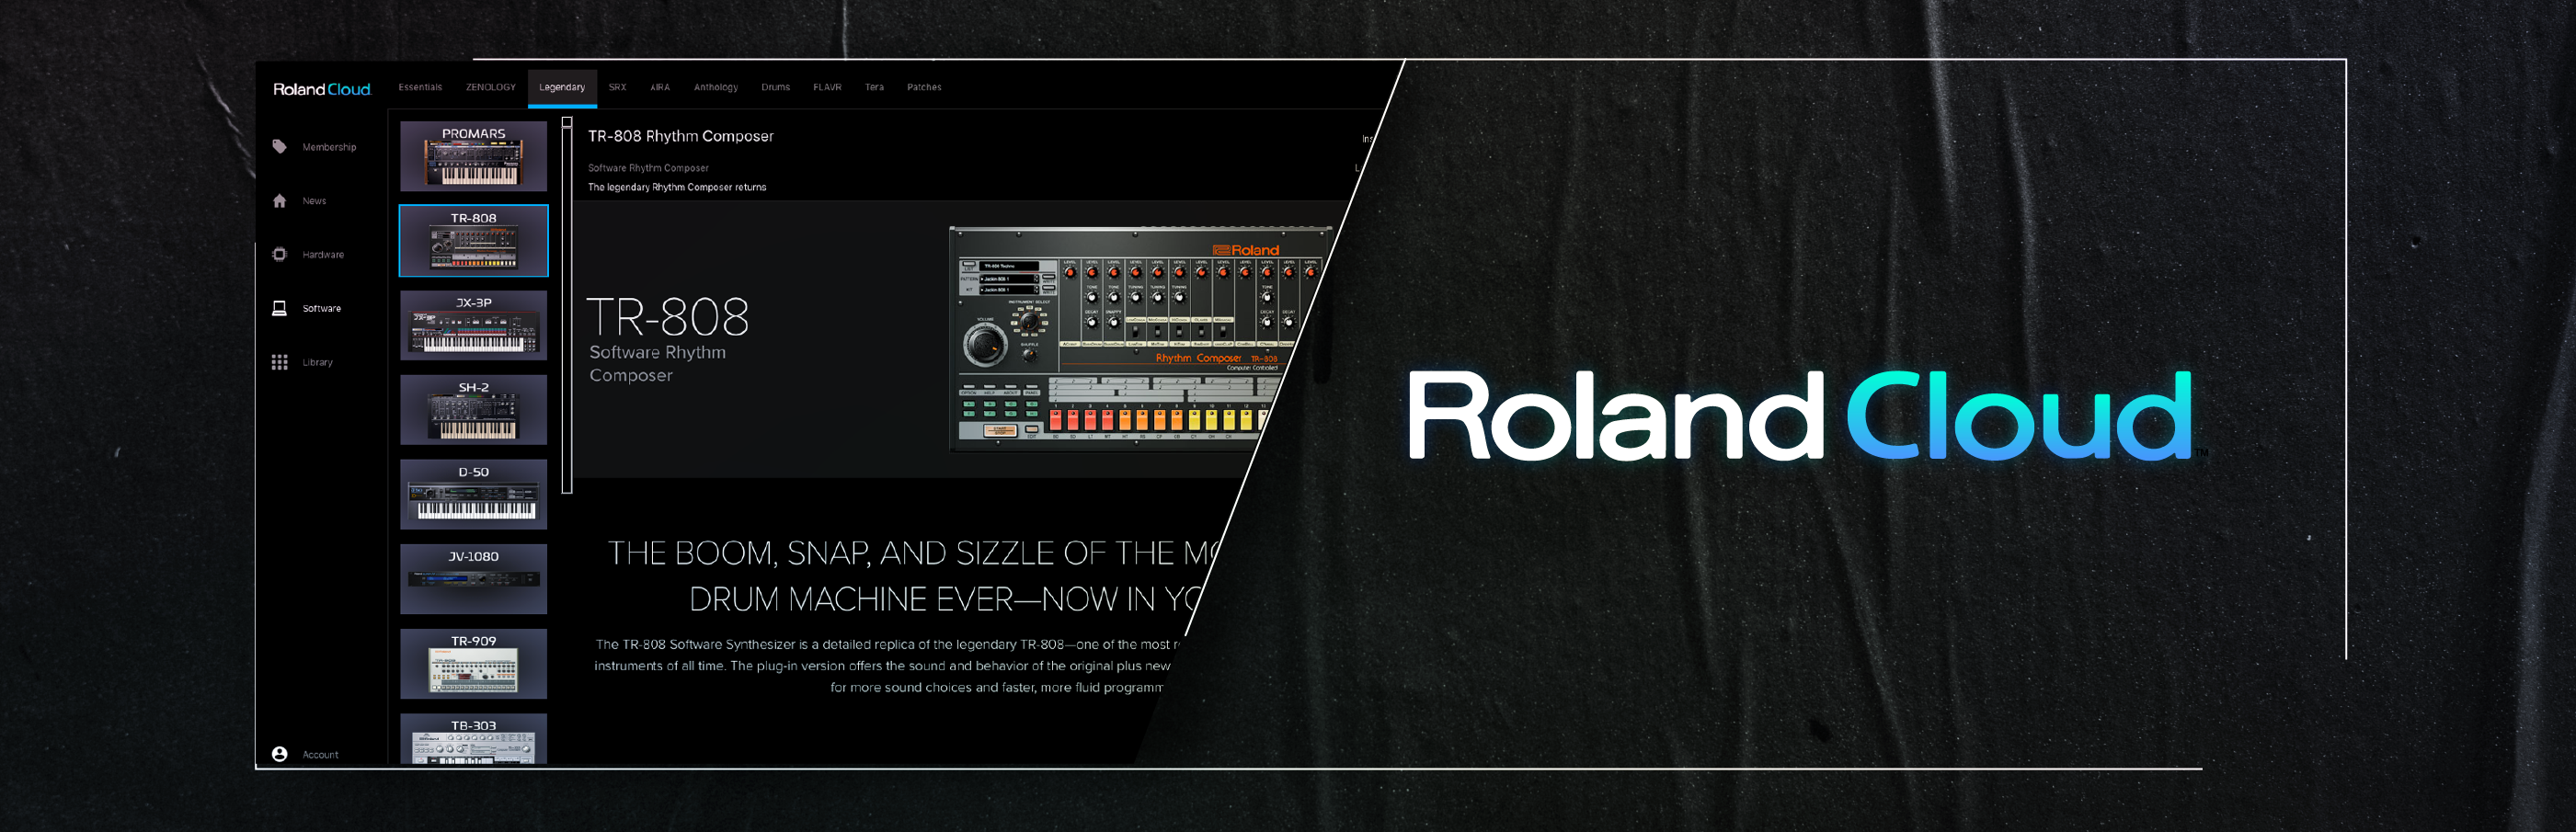 Roland software